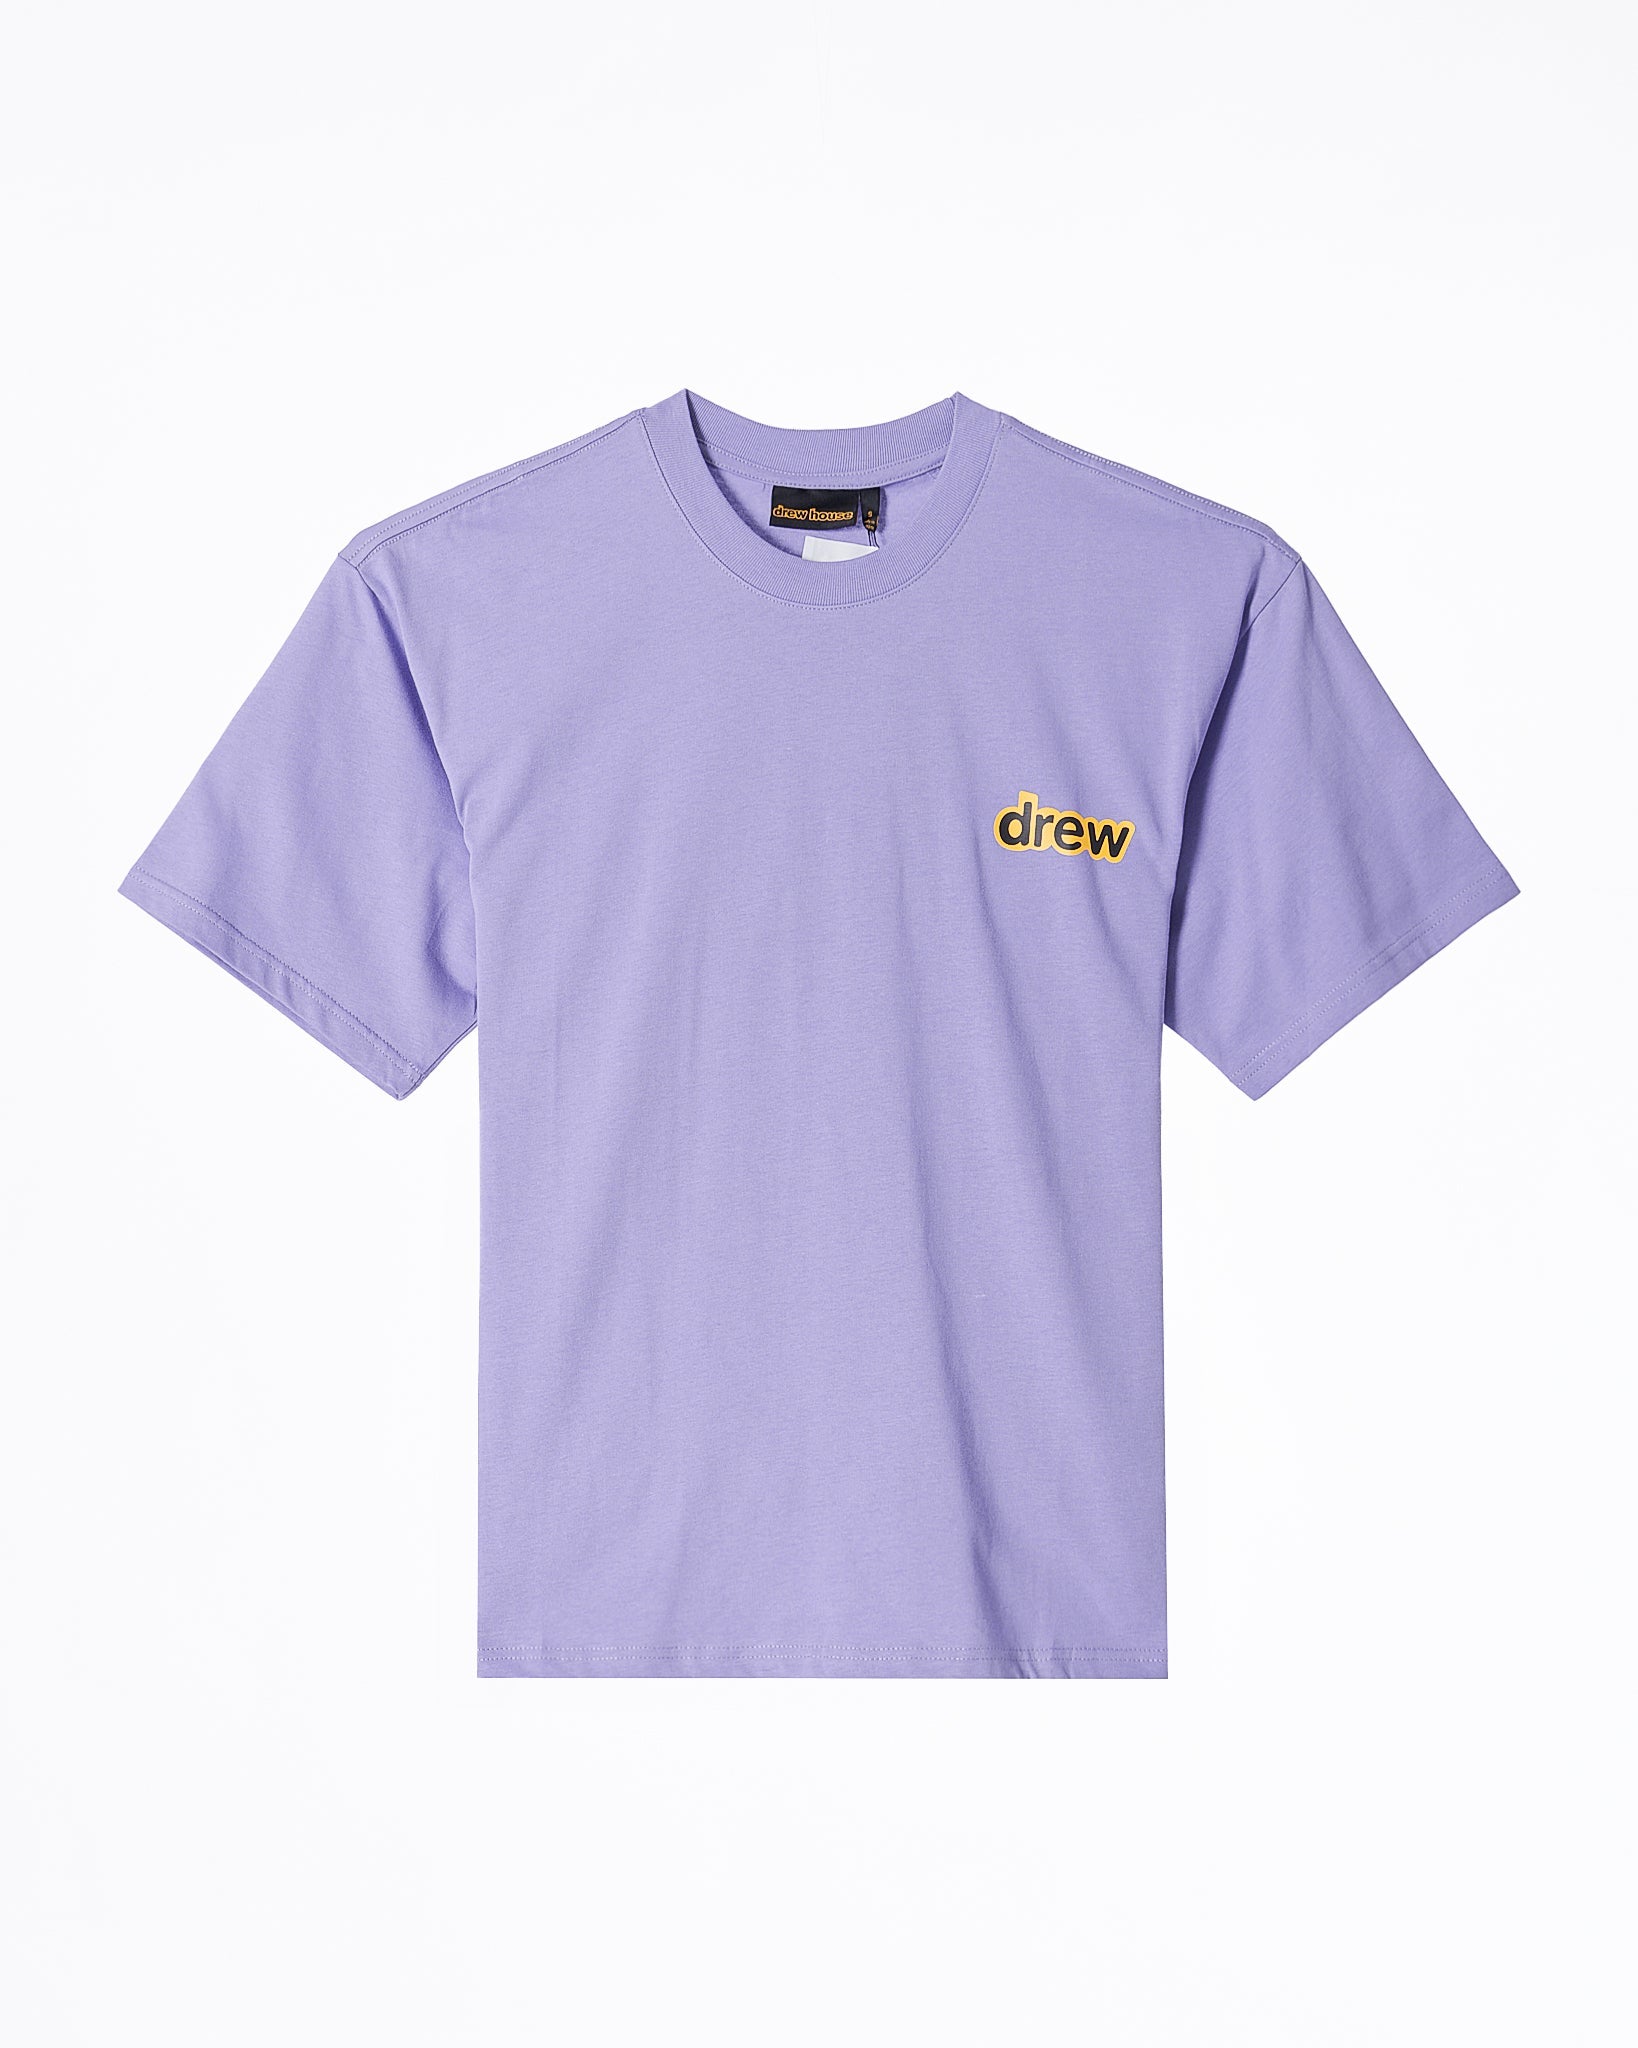 MOI OUTFIT-DRE Teddy Bear Back Unisex Purple T-Shirt 19.90